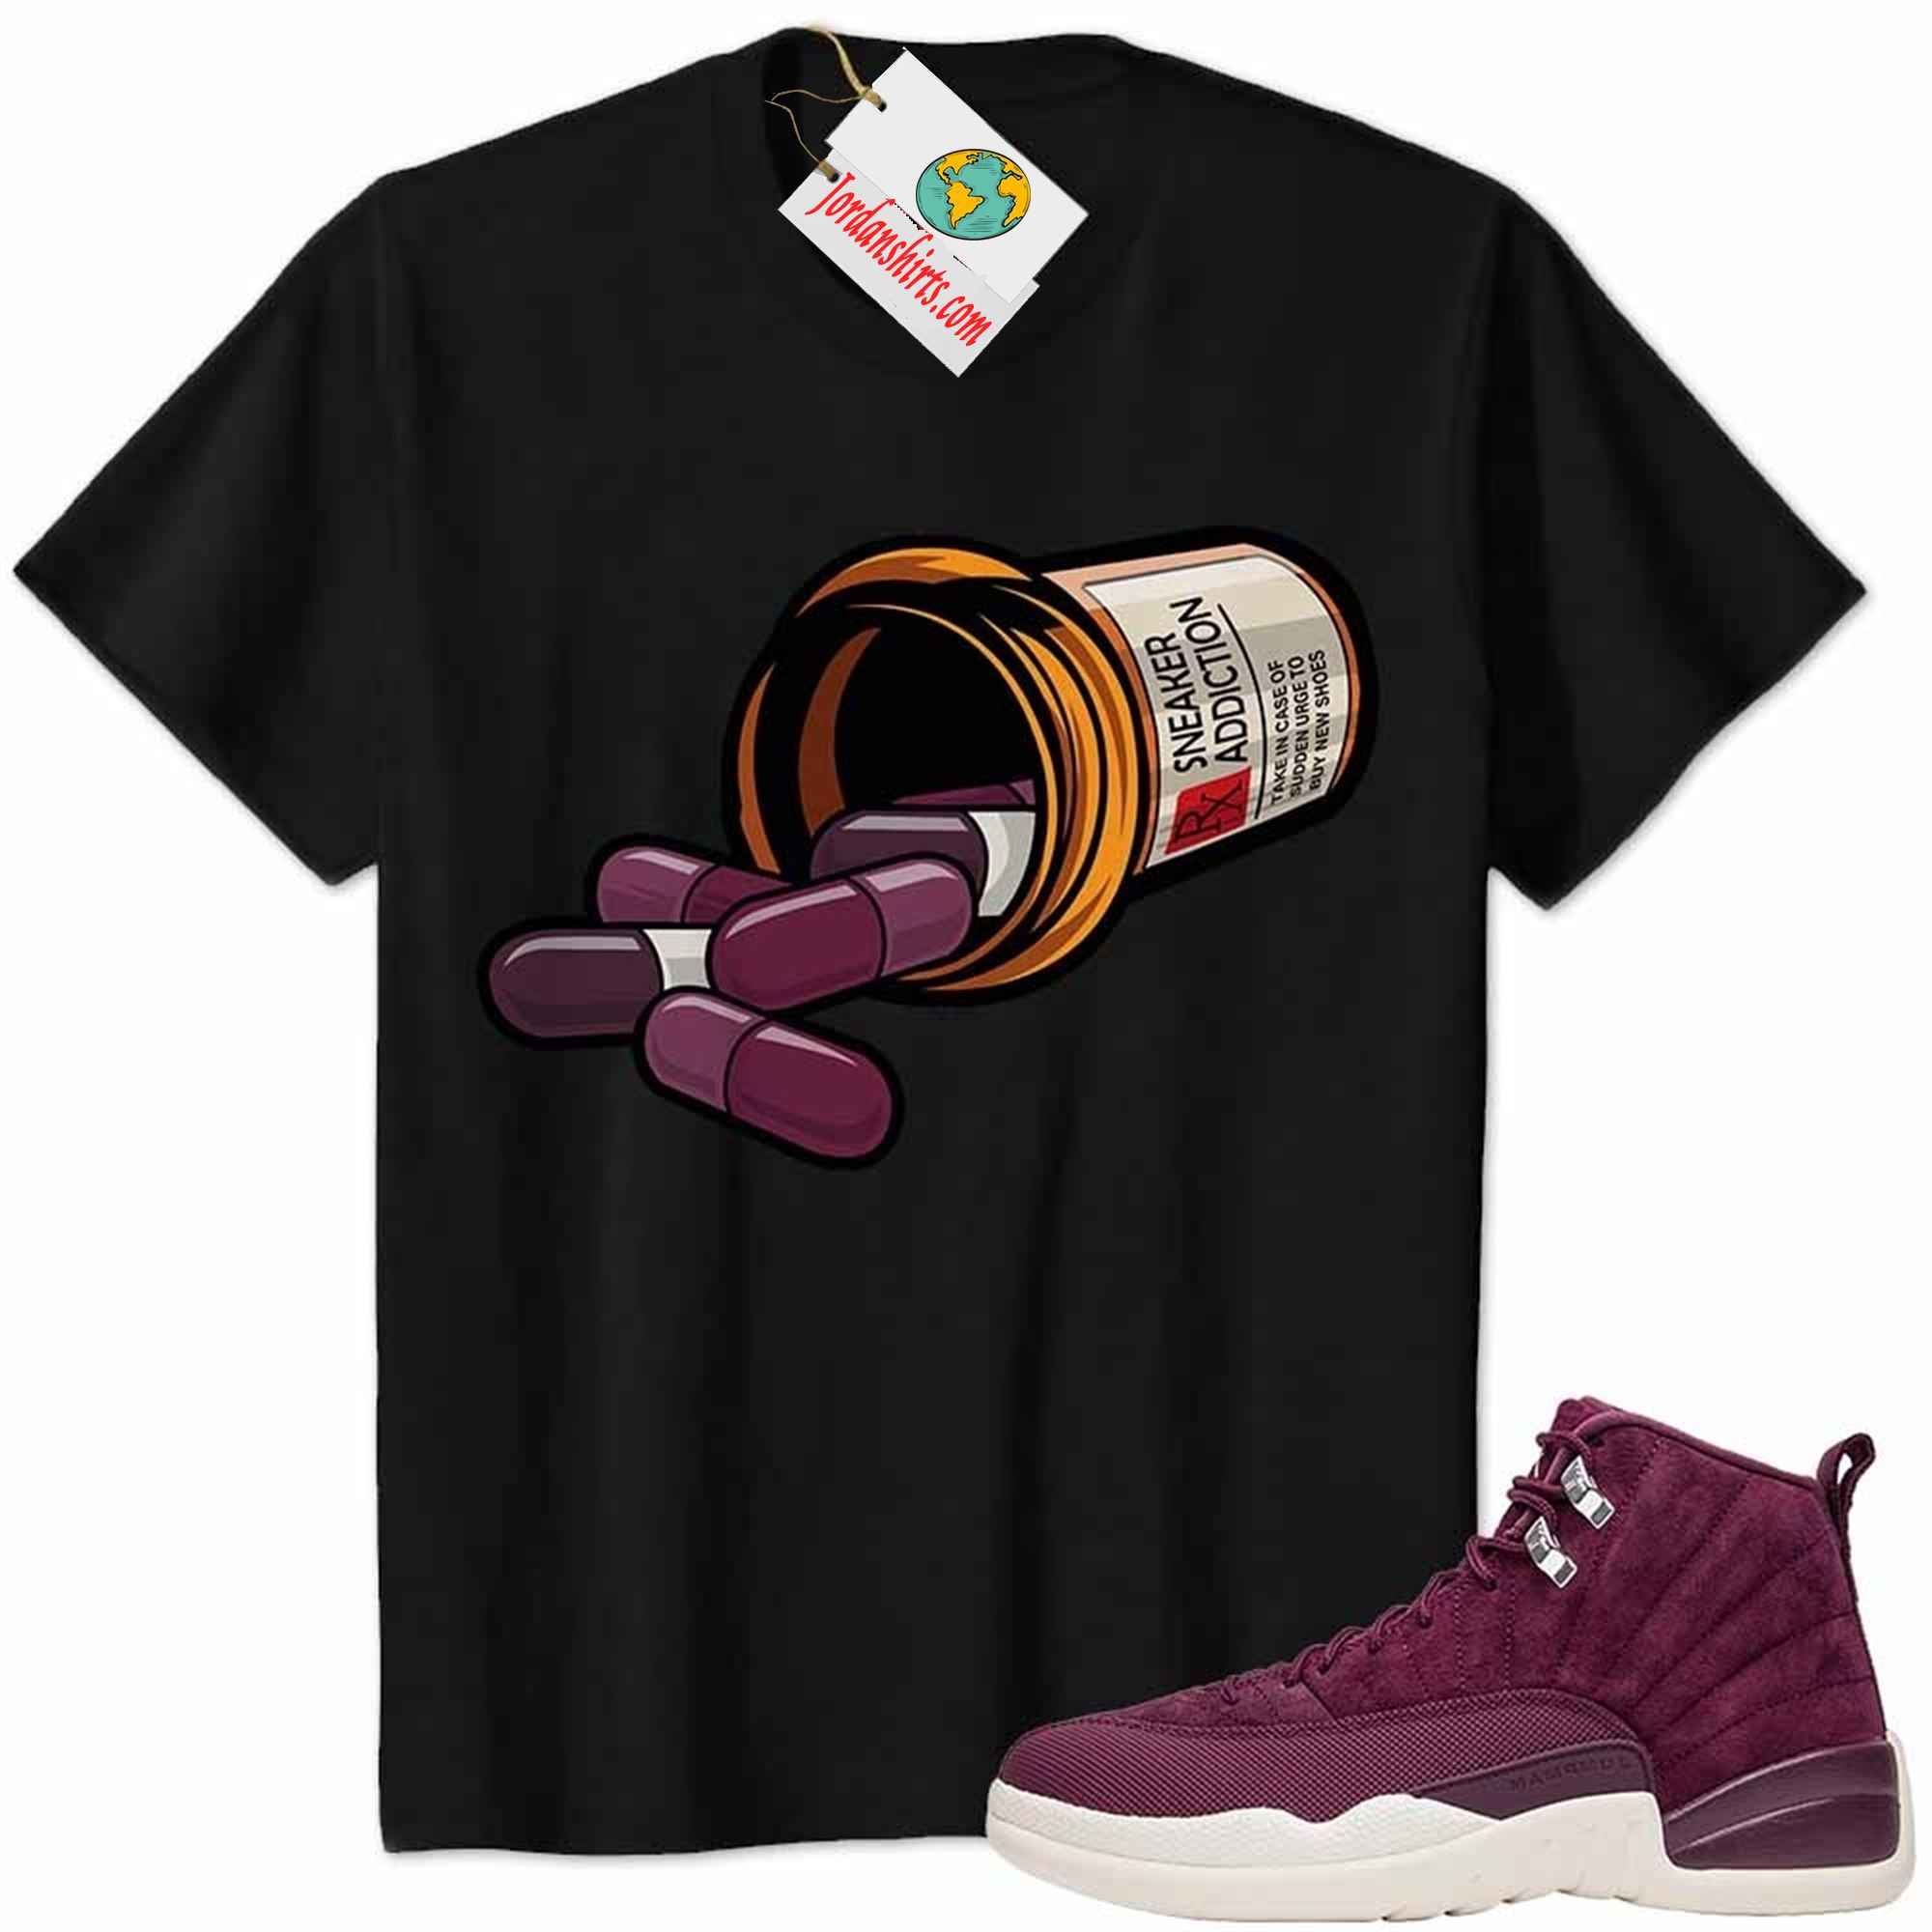 Jordan 12 Shirt, Rx Drugs Pill Bottle Sneaker Addiction Black Air Jordan 12 Bordeaux 12s Size Up To 5xl